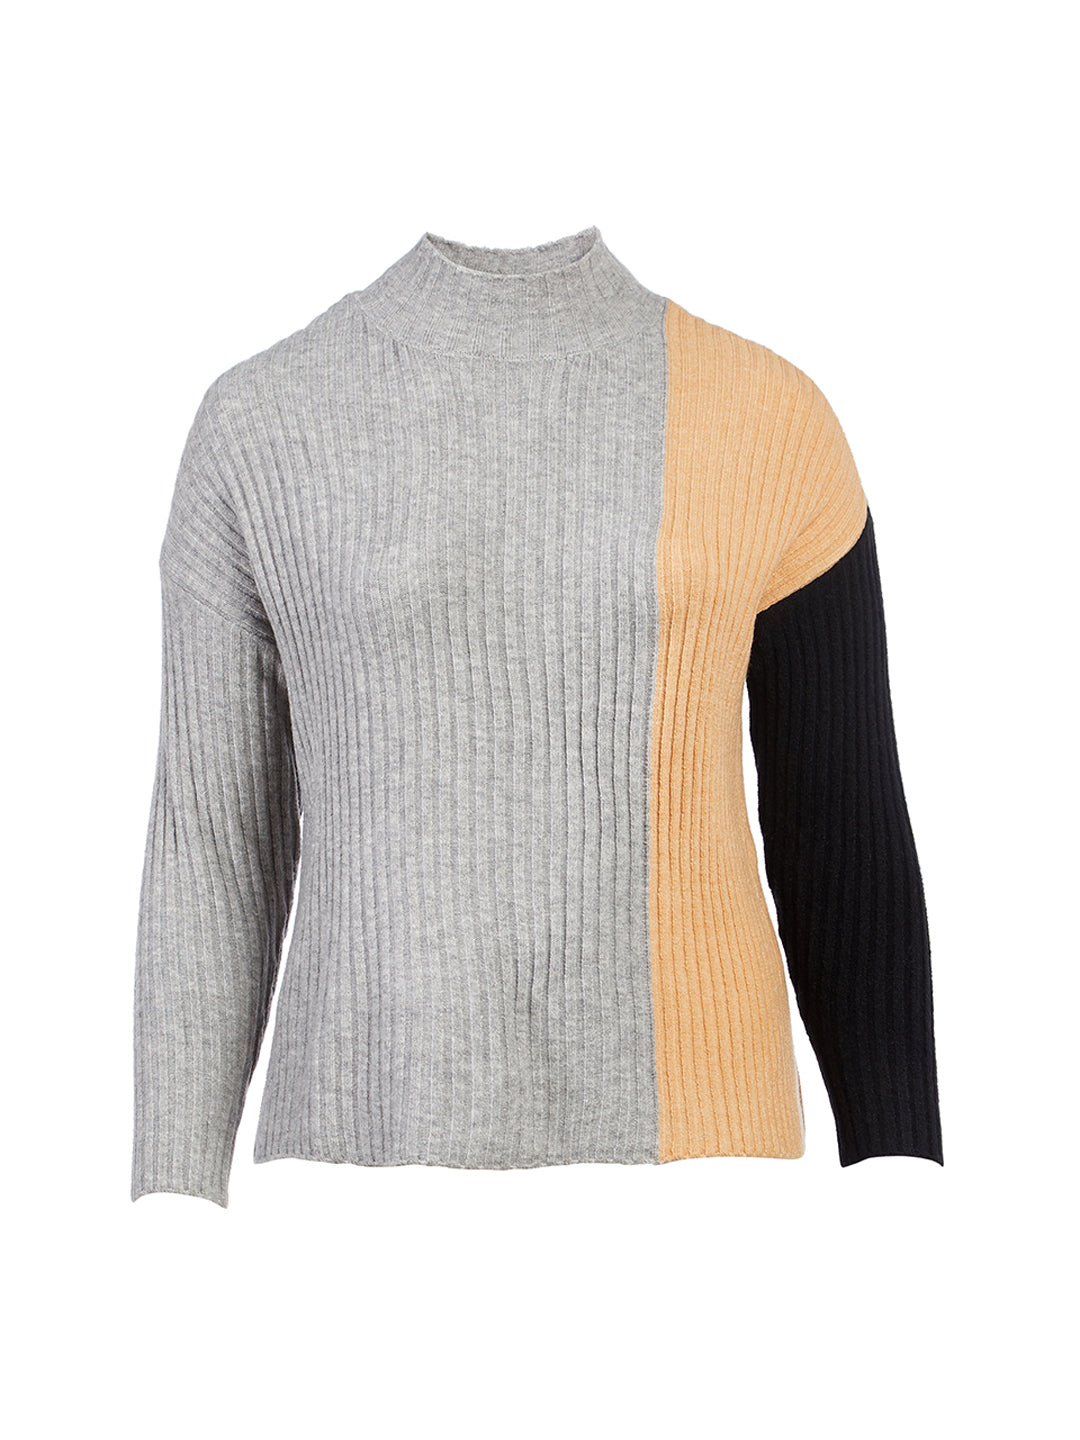 Colorblock Mock Neck Sweater | Calvin Klein | Gwynnie Bee Rental  Subscription